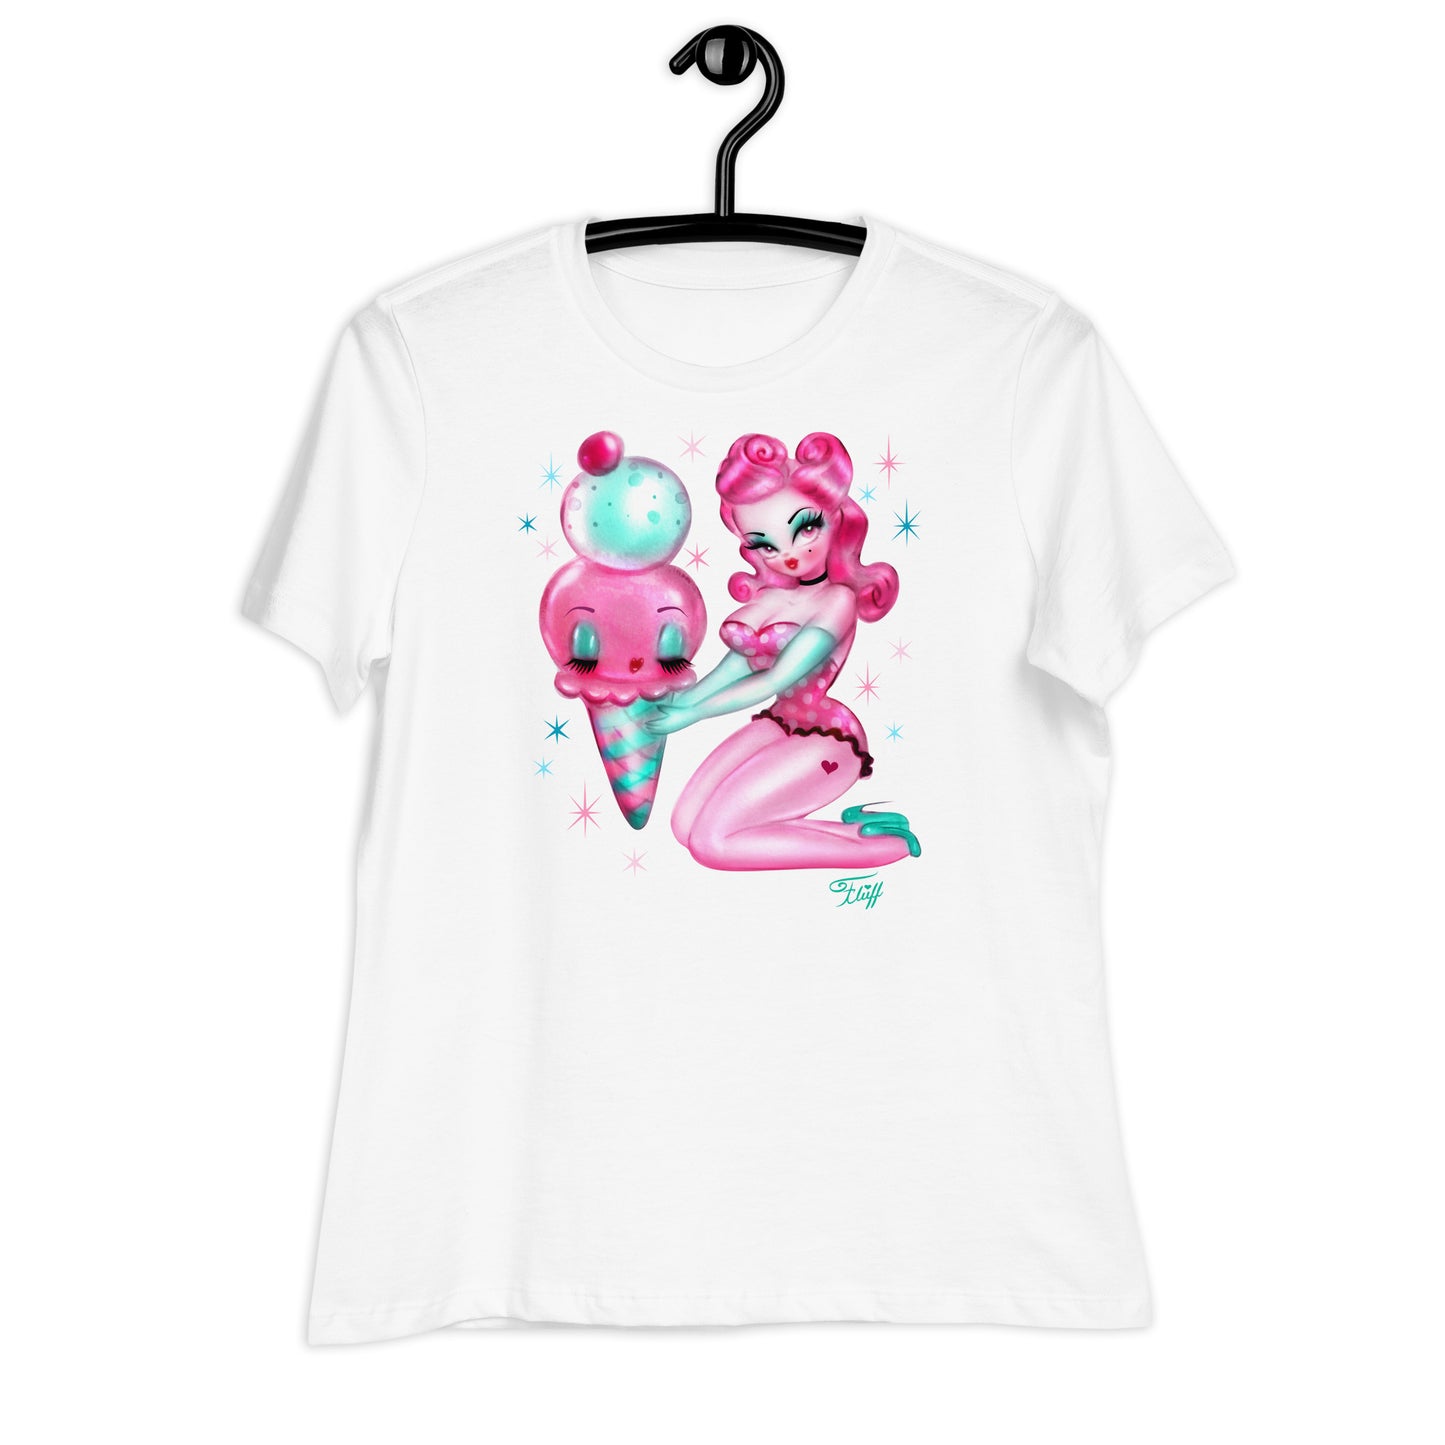 Bubble Gum Ice Cream Pin Up Girl • Women's Relaxed T-Shirt